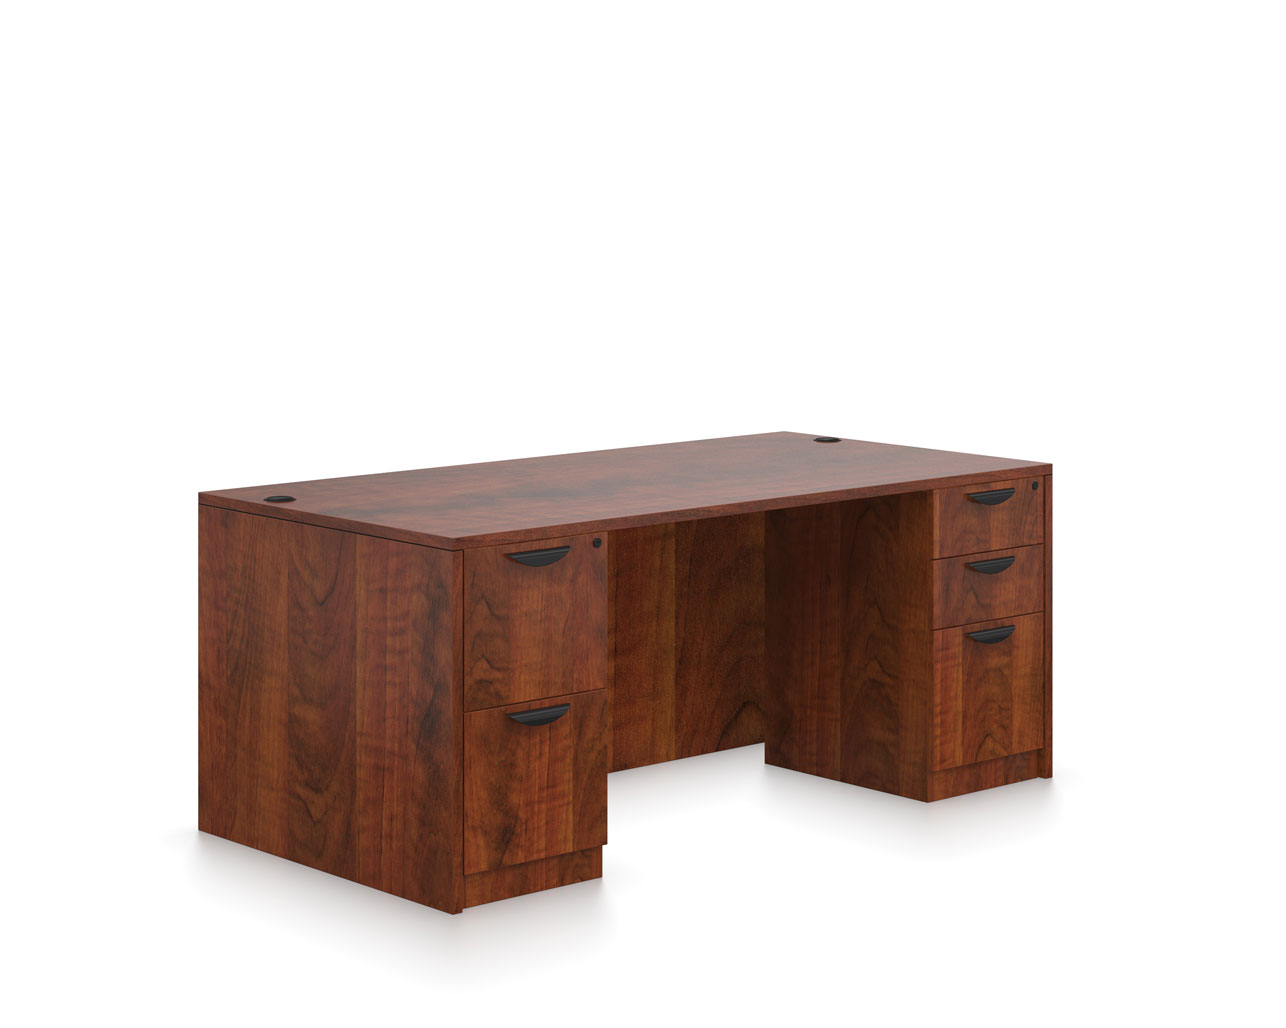 Affordable Office Furniture Desks from OTG - Shown in American Dark Cherry woodgrain